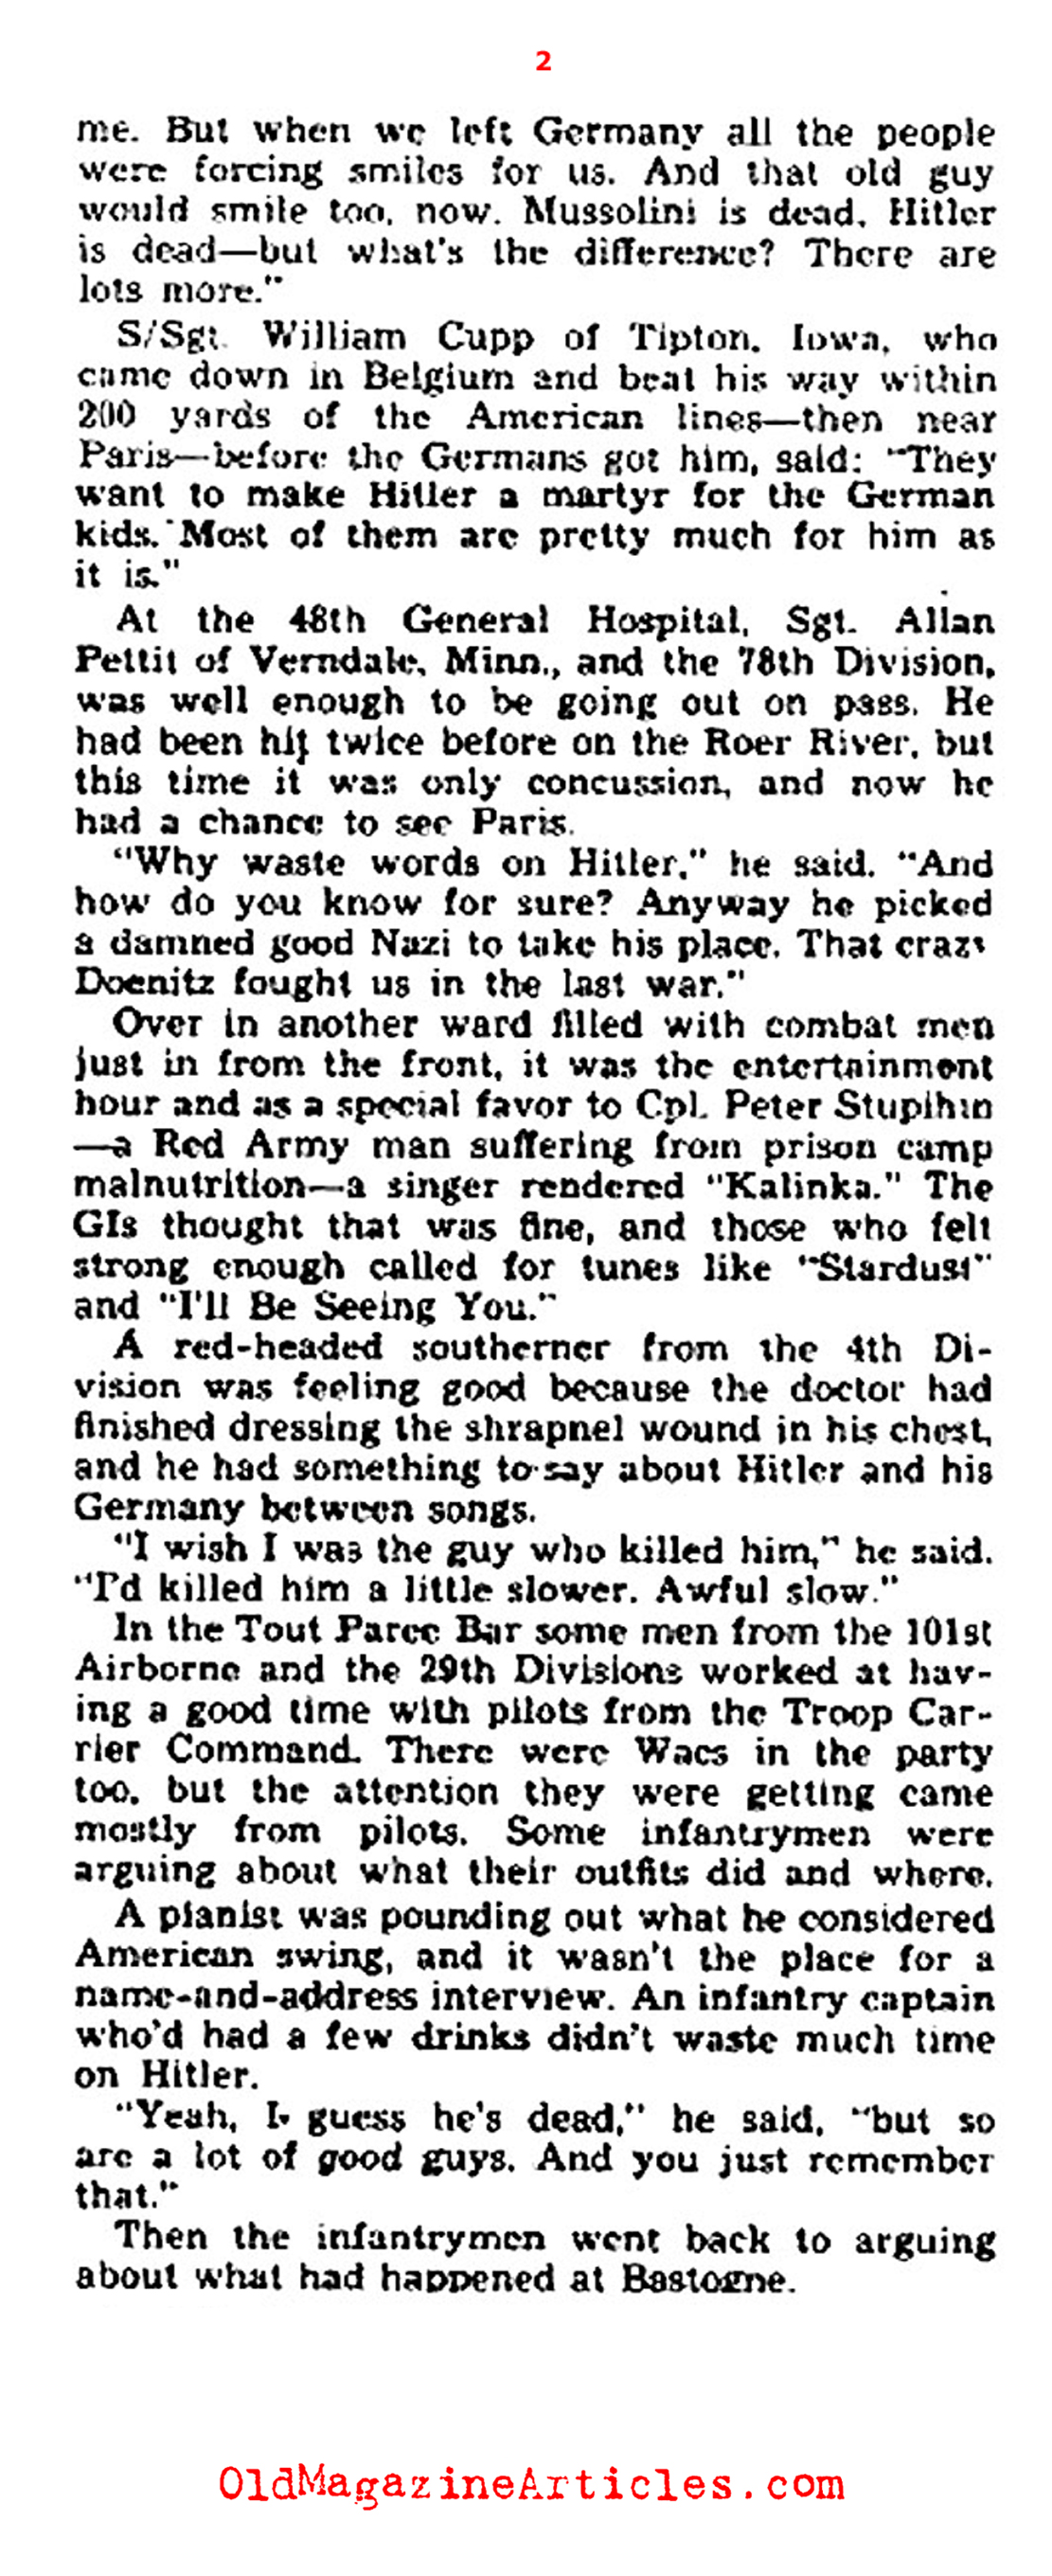 The News of Hitler's Death (Yank Magazine, 1945)